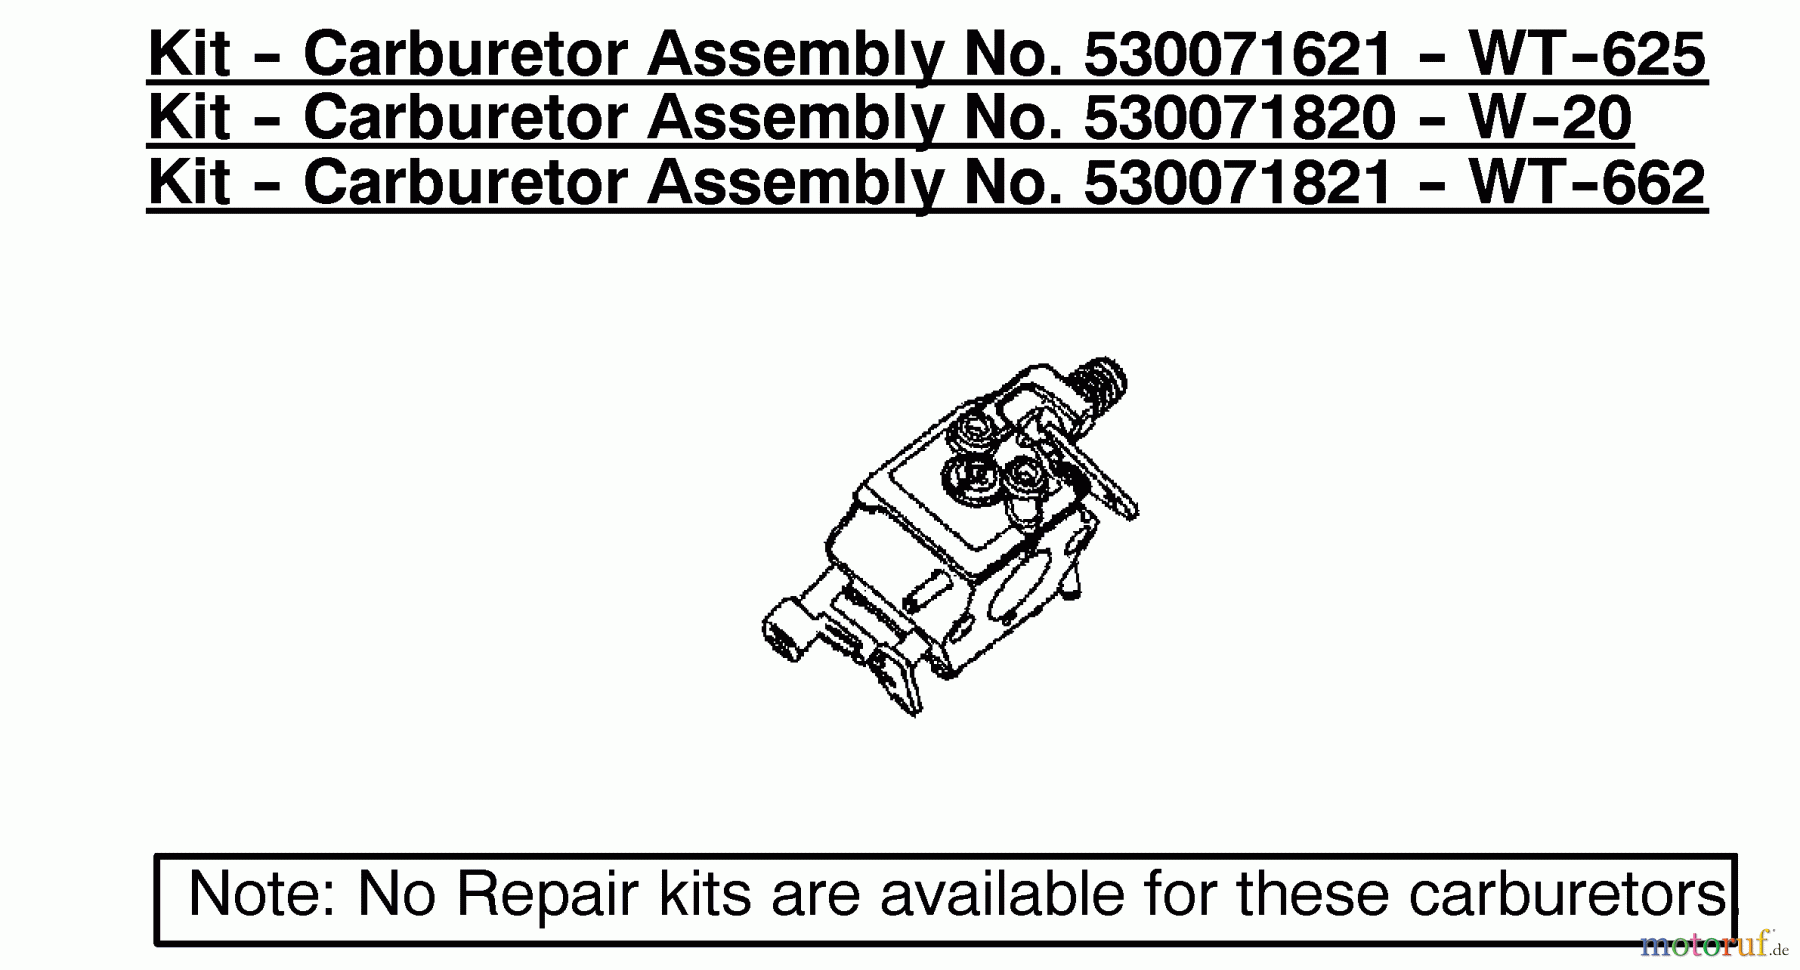  Poulan / Weed Eater Motorsägen 2250 (Type 1) - Poulan Woodmaster Chainsaw Kit - Carburetor Assembly 530071621/530071820/530071821